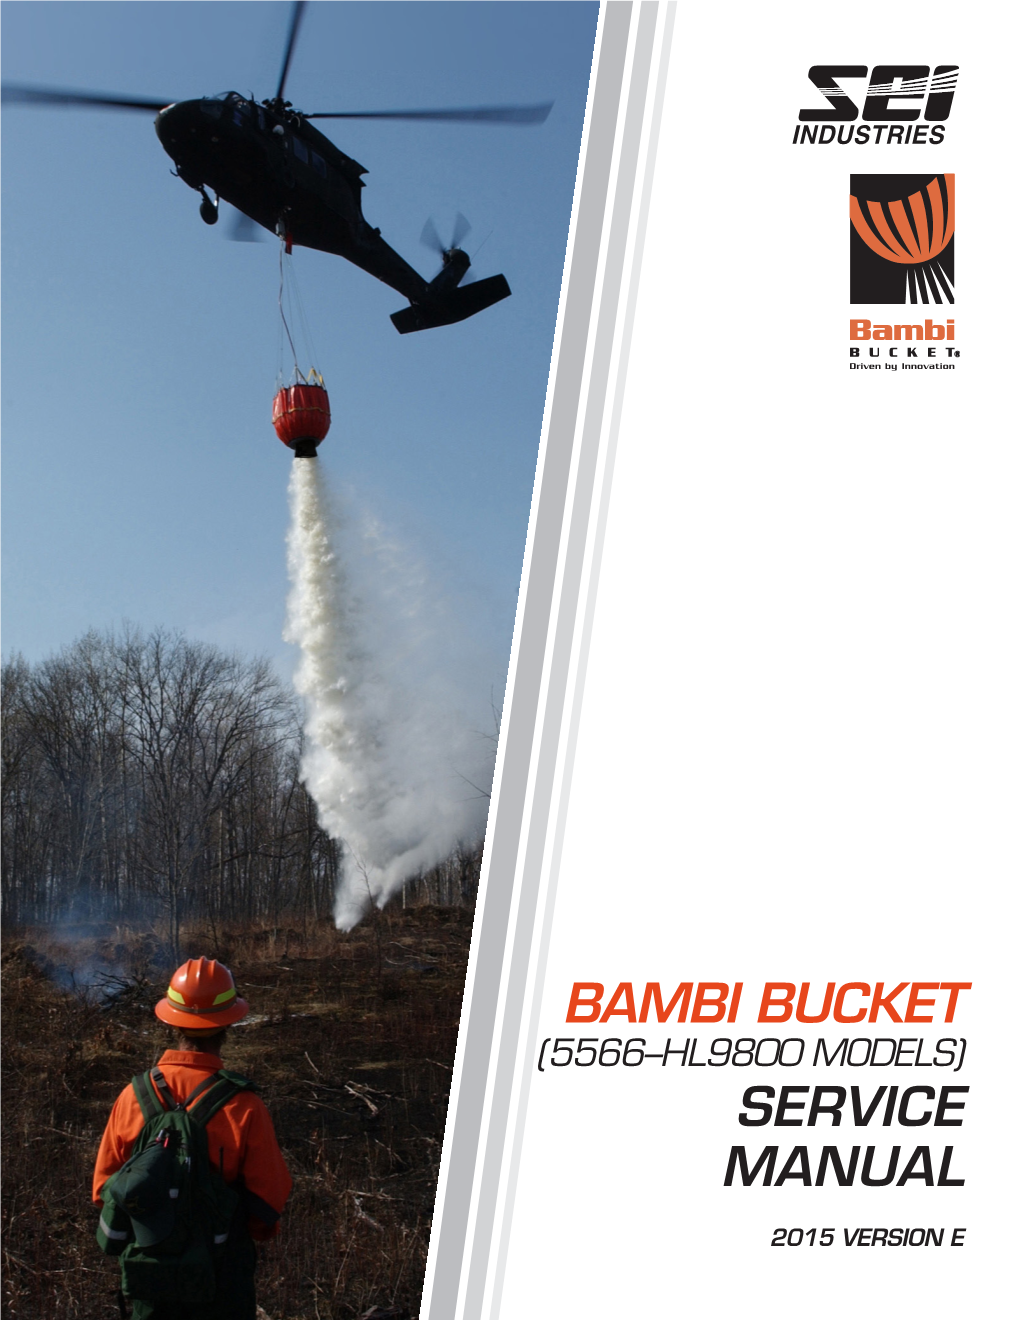 BAMBI BUCKET SERVICE MANUAL - Version E (Models 5566-HL9800 Only)